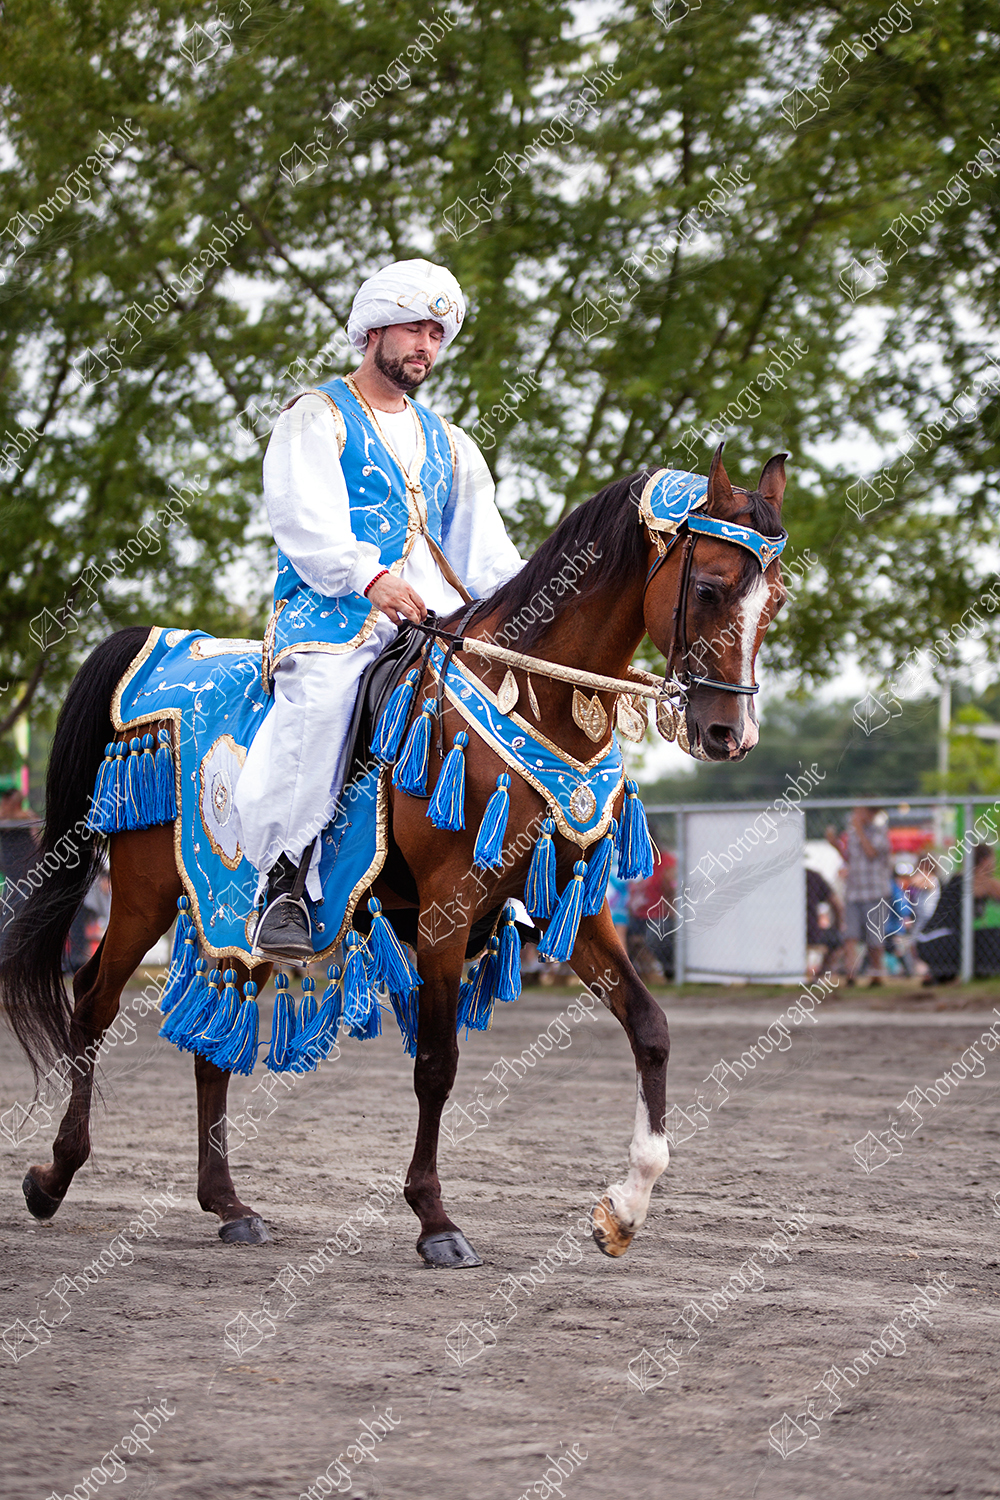 elze_photo_7114_spectacle_costume_cheval_wonderful_arabian_show